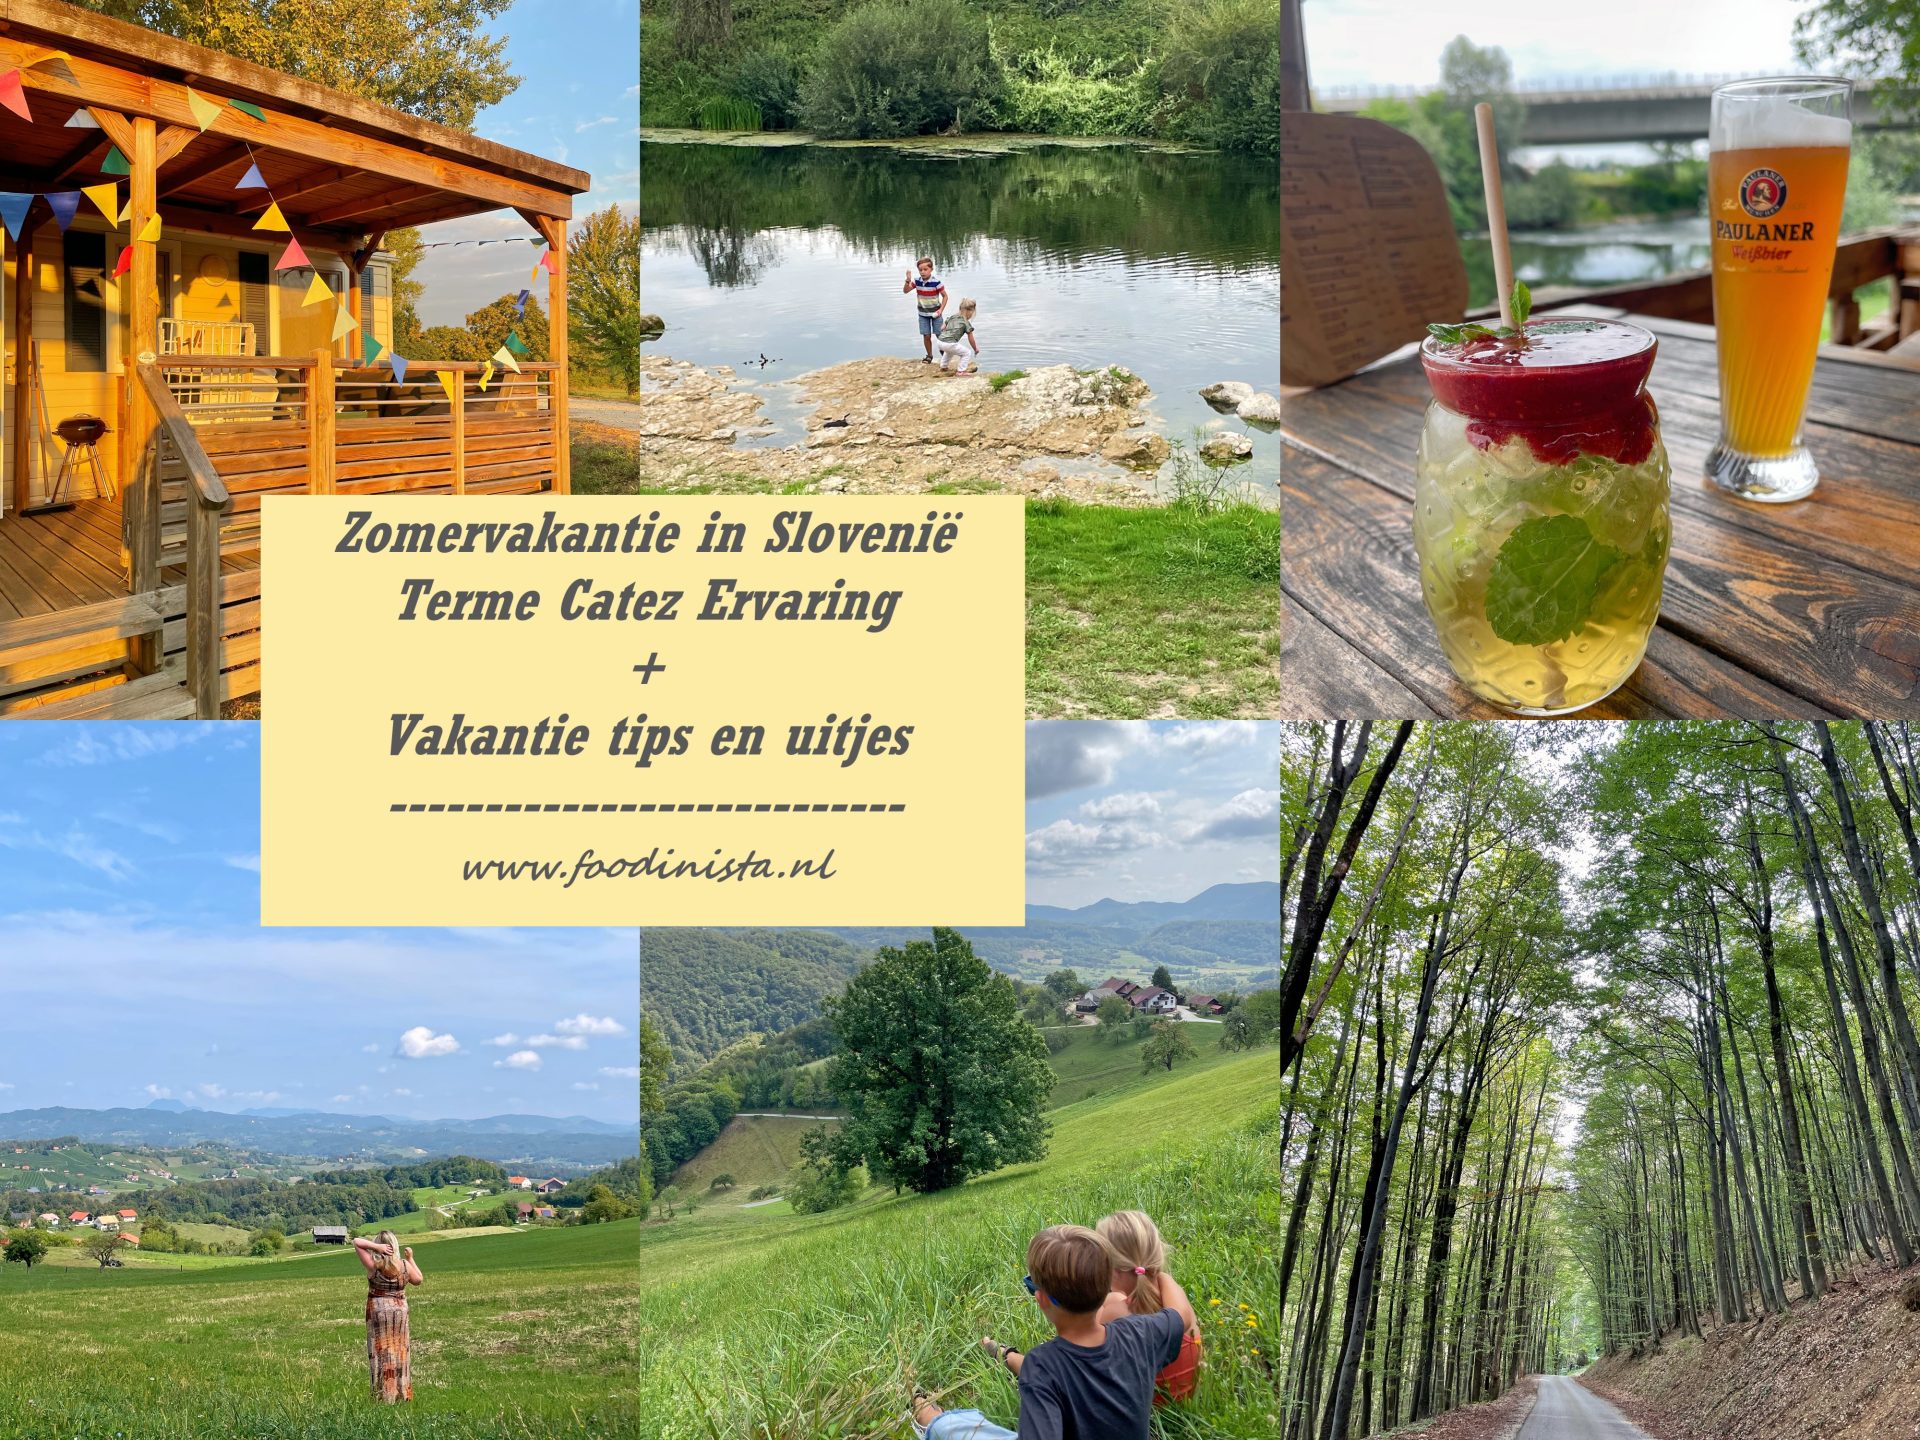 Zomervakantie in Slovenië - Camping Terme Catez ervaring